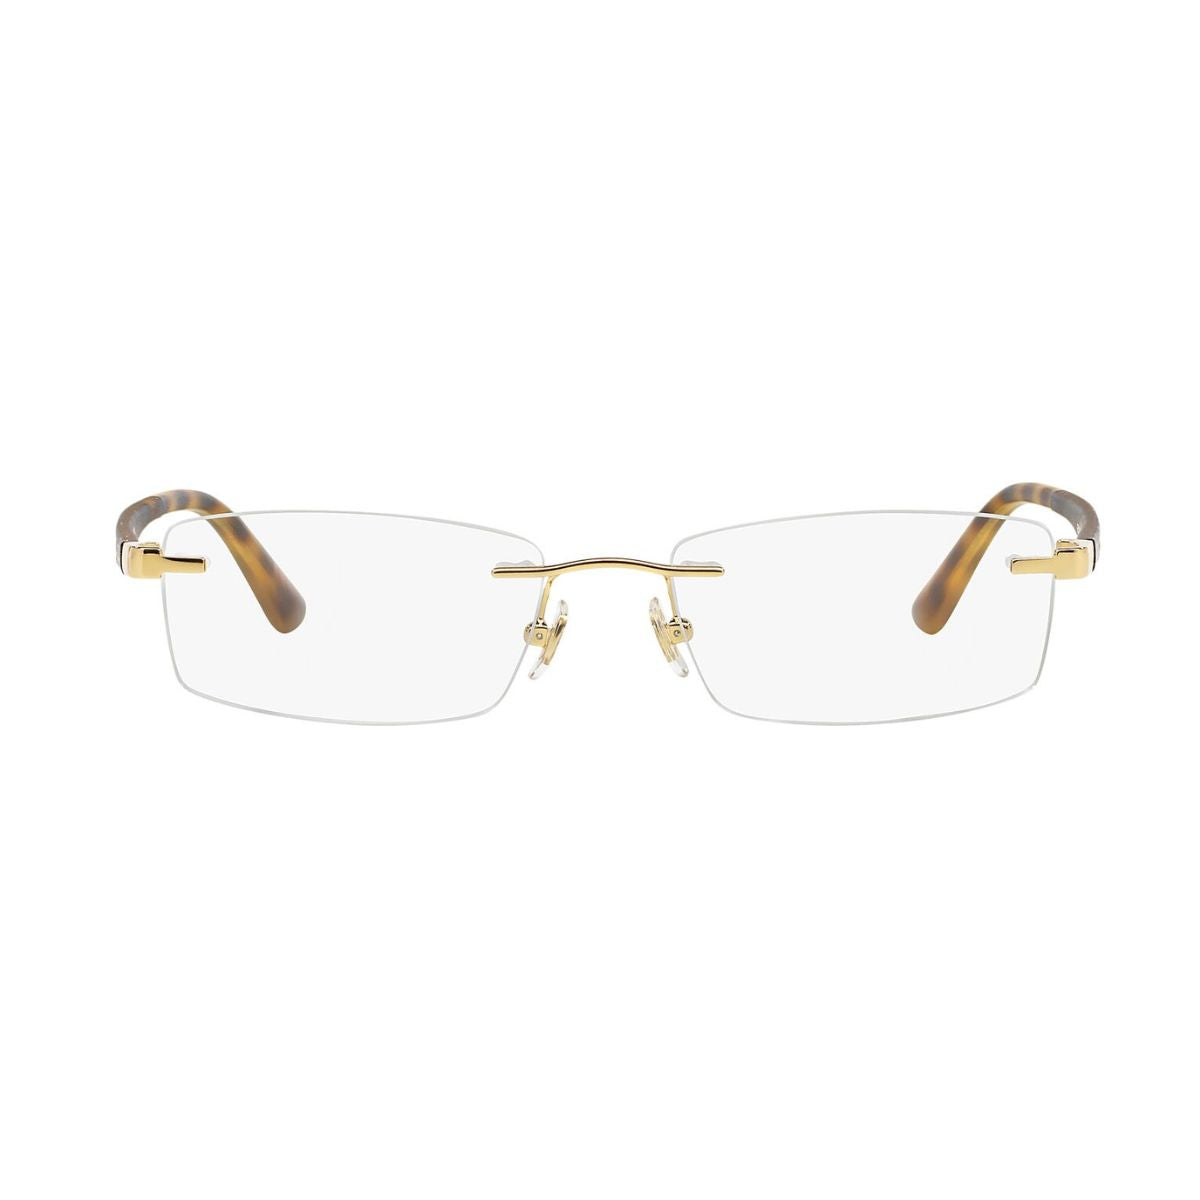 "shop Rayban 6326I 2500 trendy eyewear glasses frame for men's and women's online at optorium"